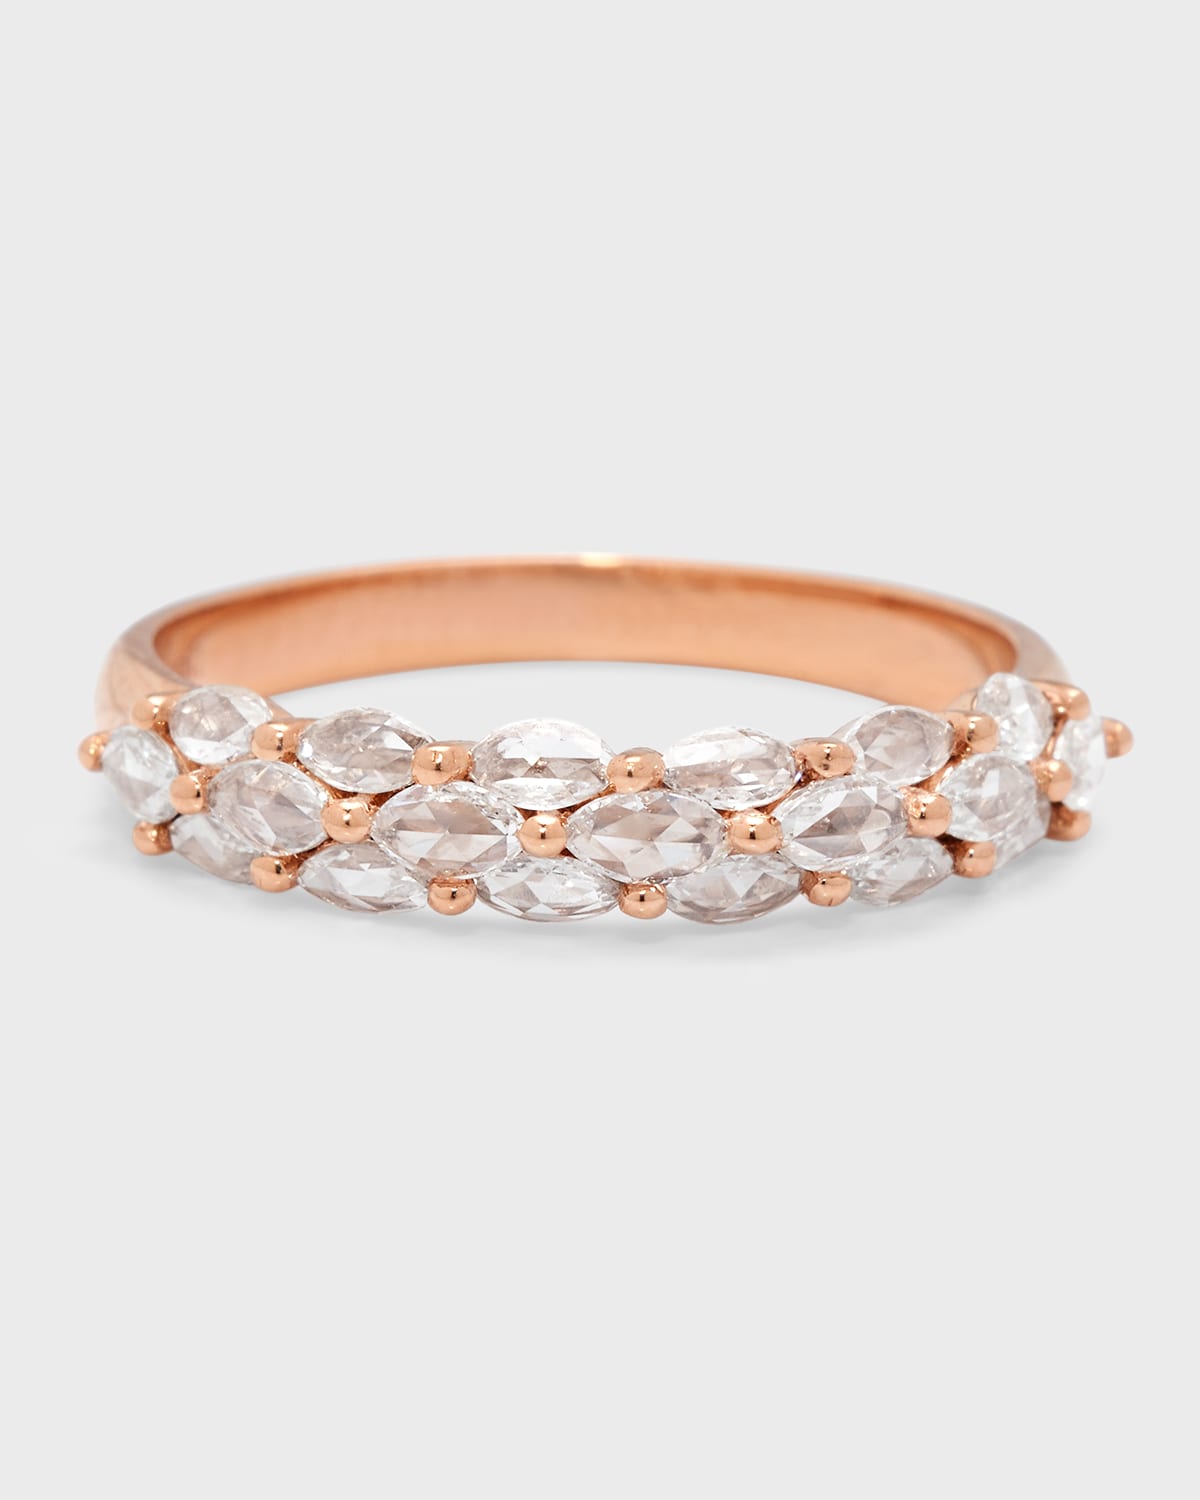 18K Rose Gold Marquise Diamond Half Eternity Band Ring, Size 6.75